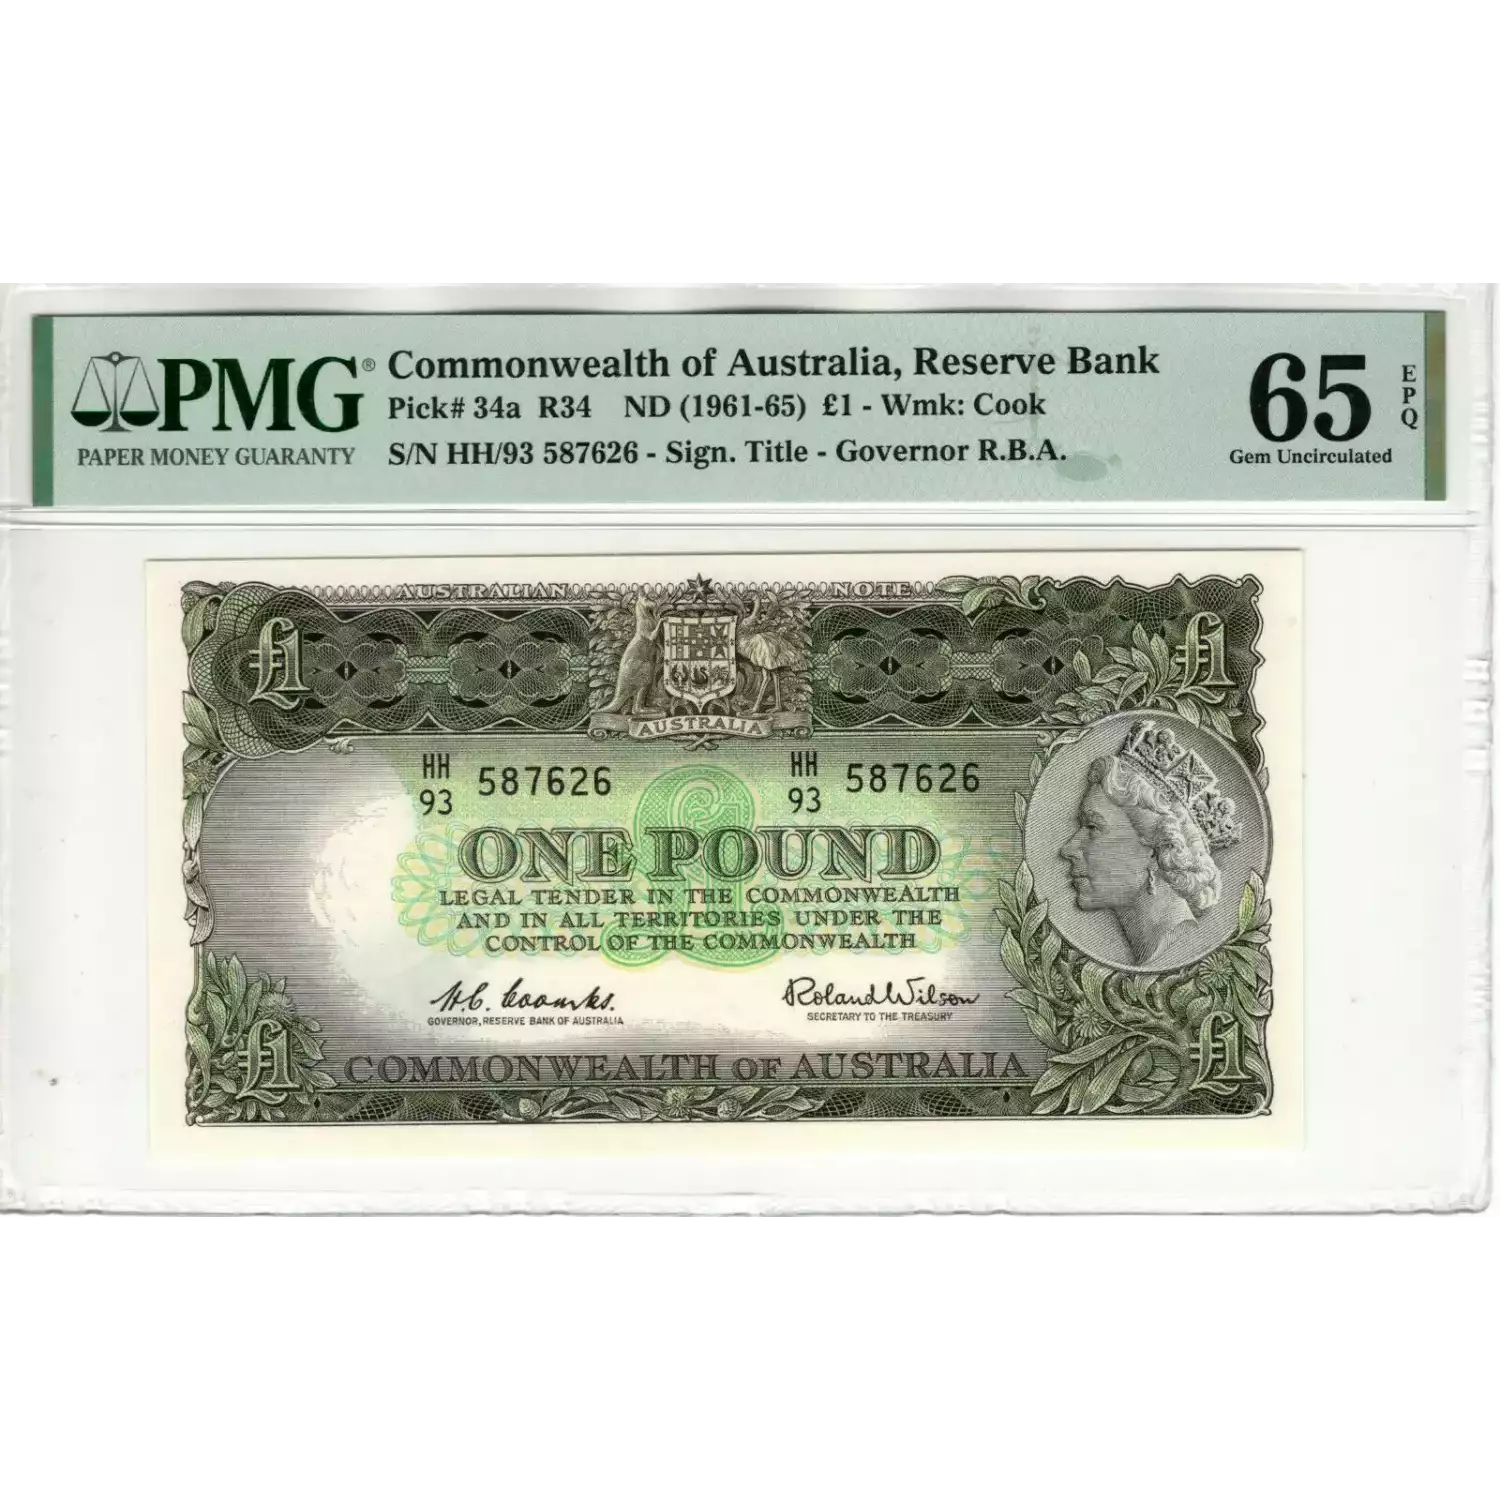 Commonwealth of Australia, Reserve Bank